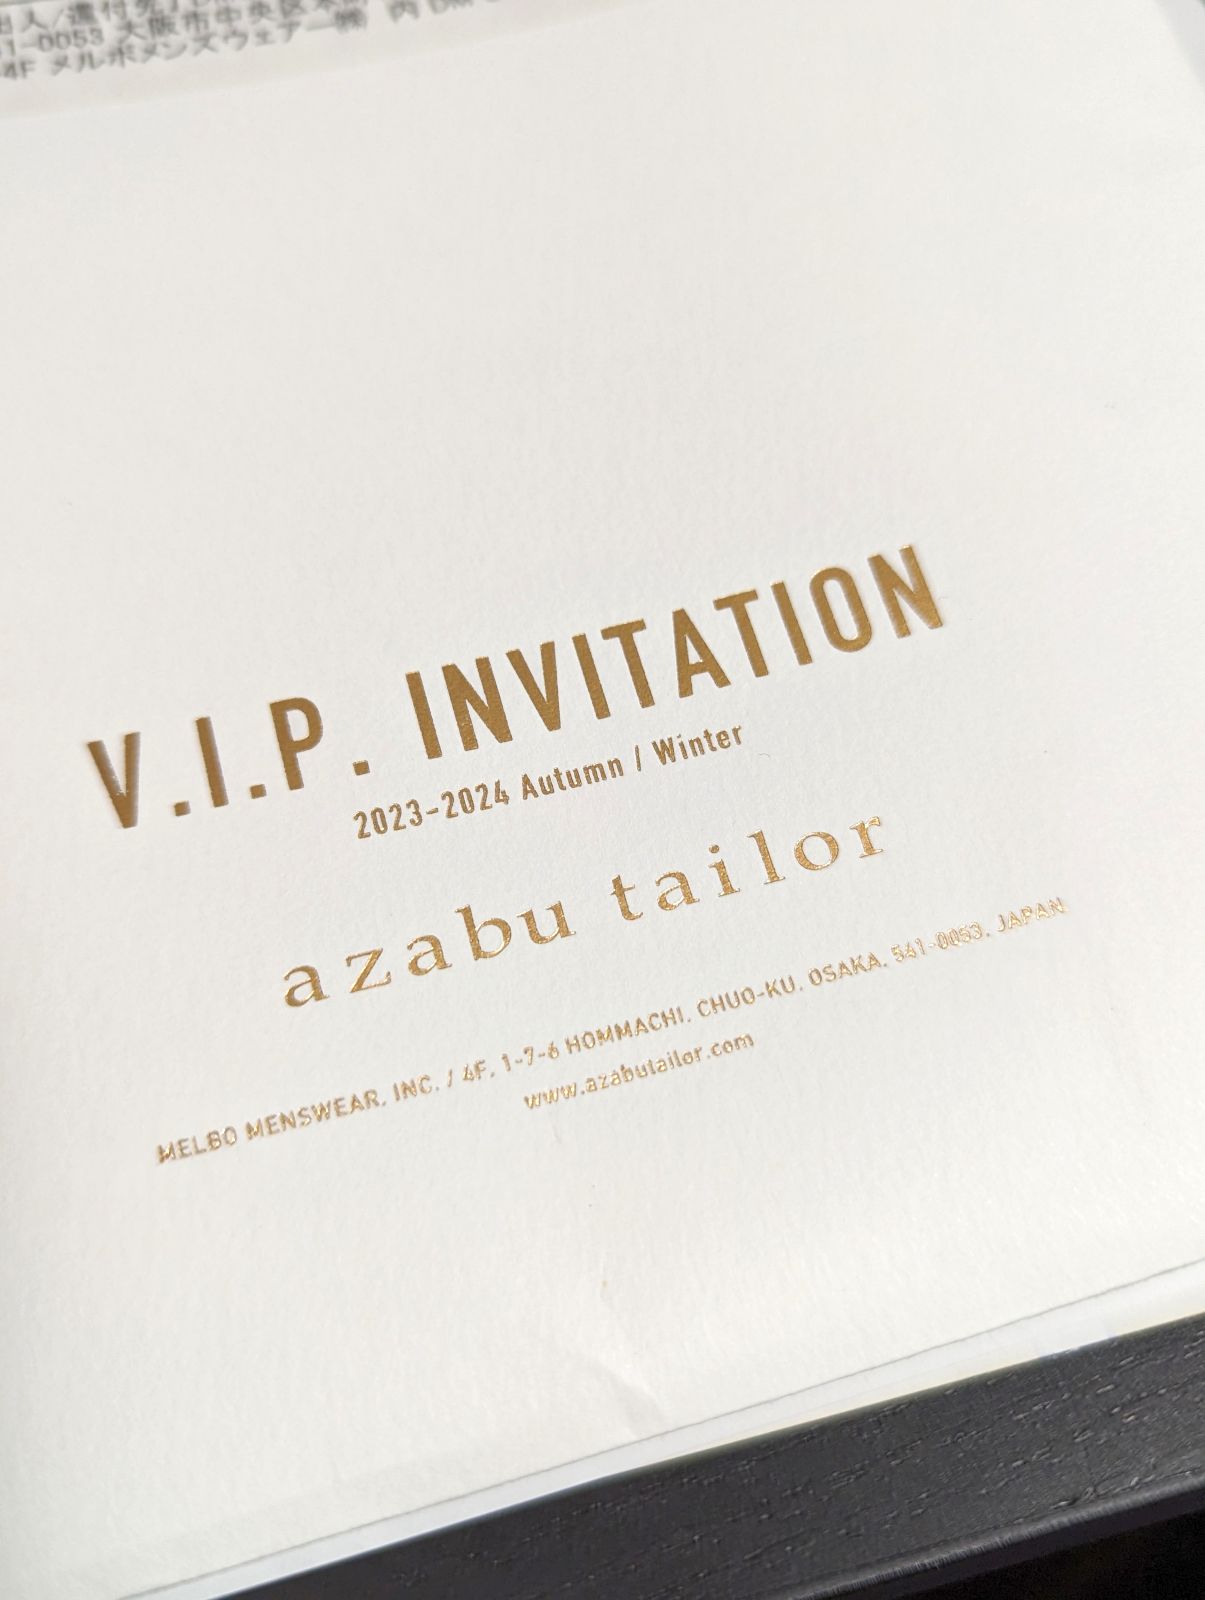 V.I.P. INVITATION